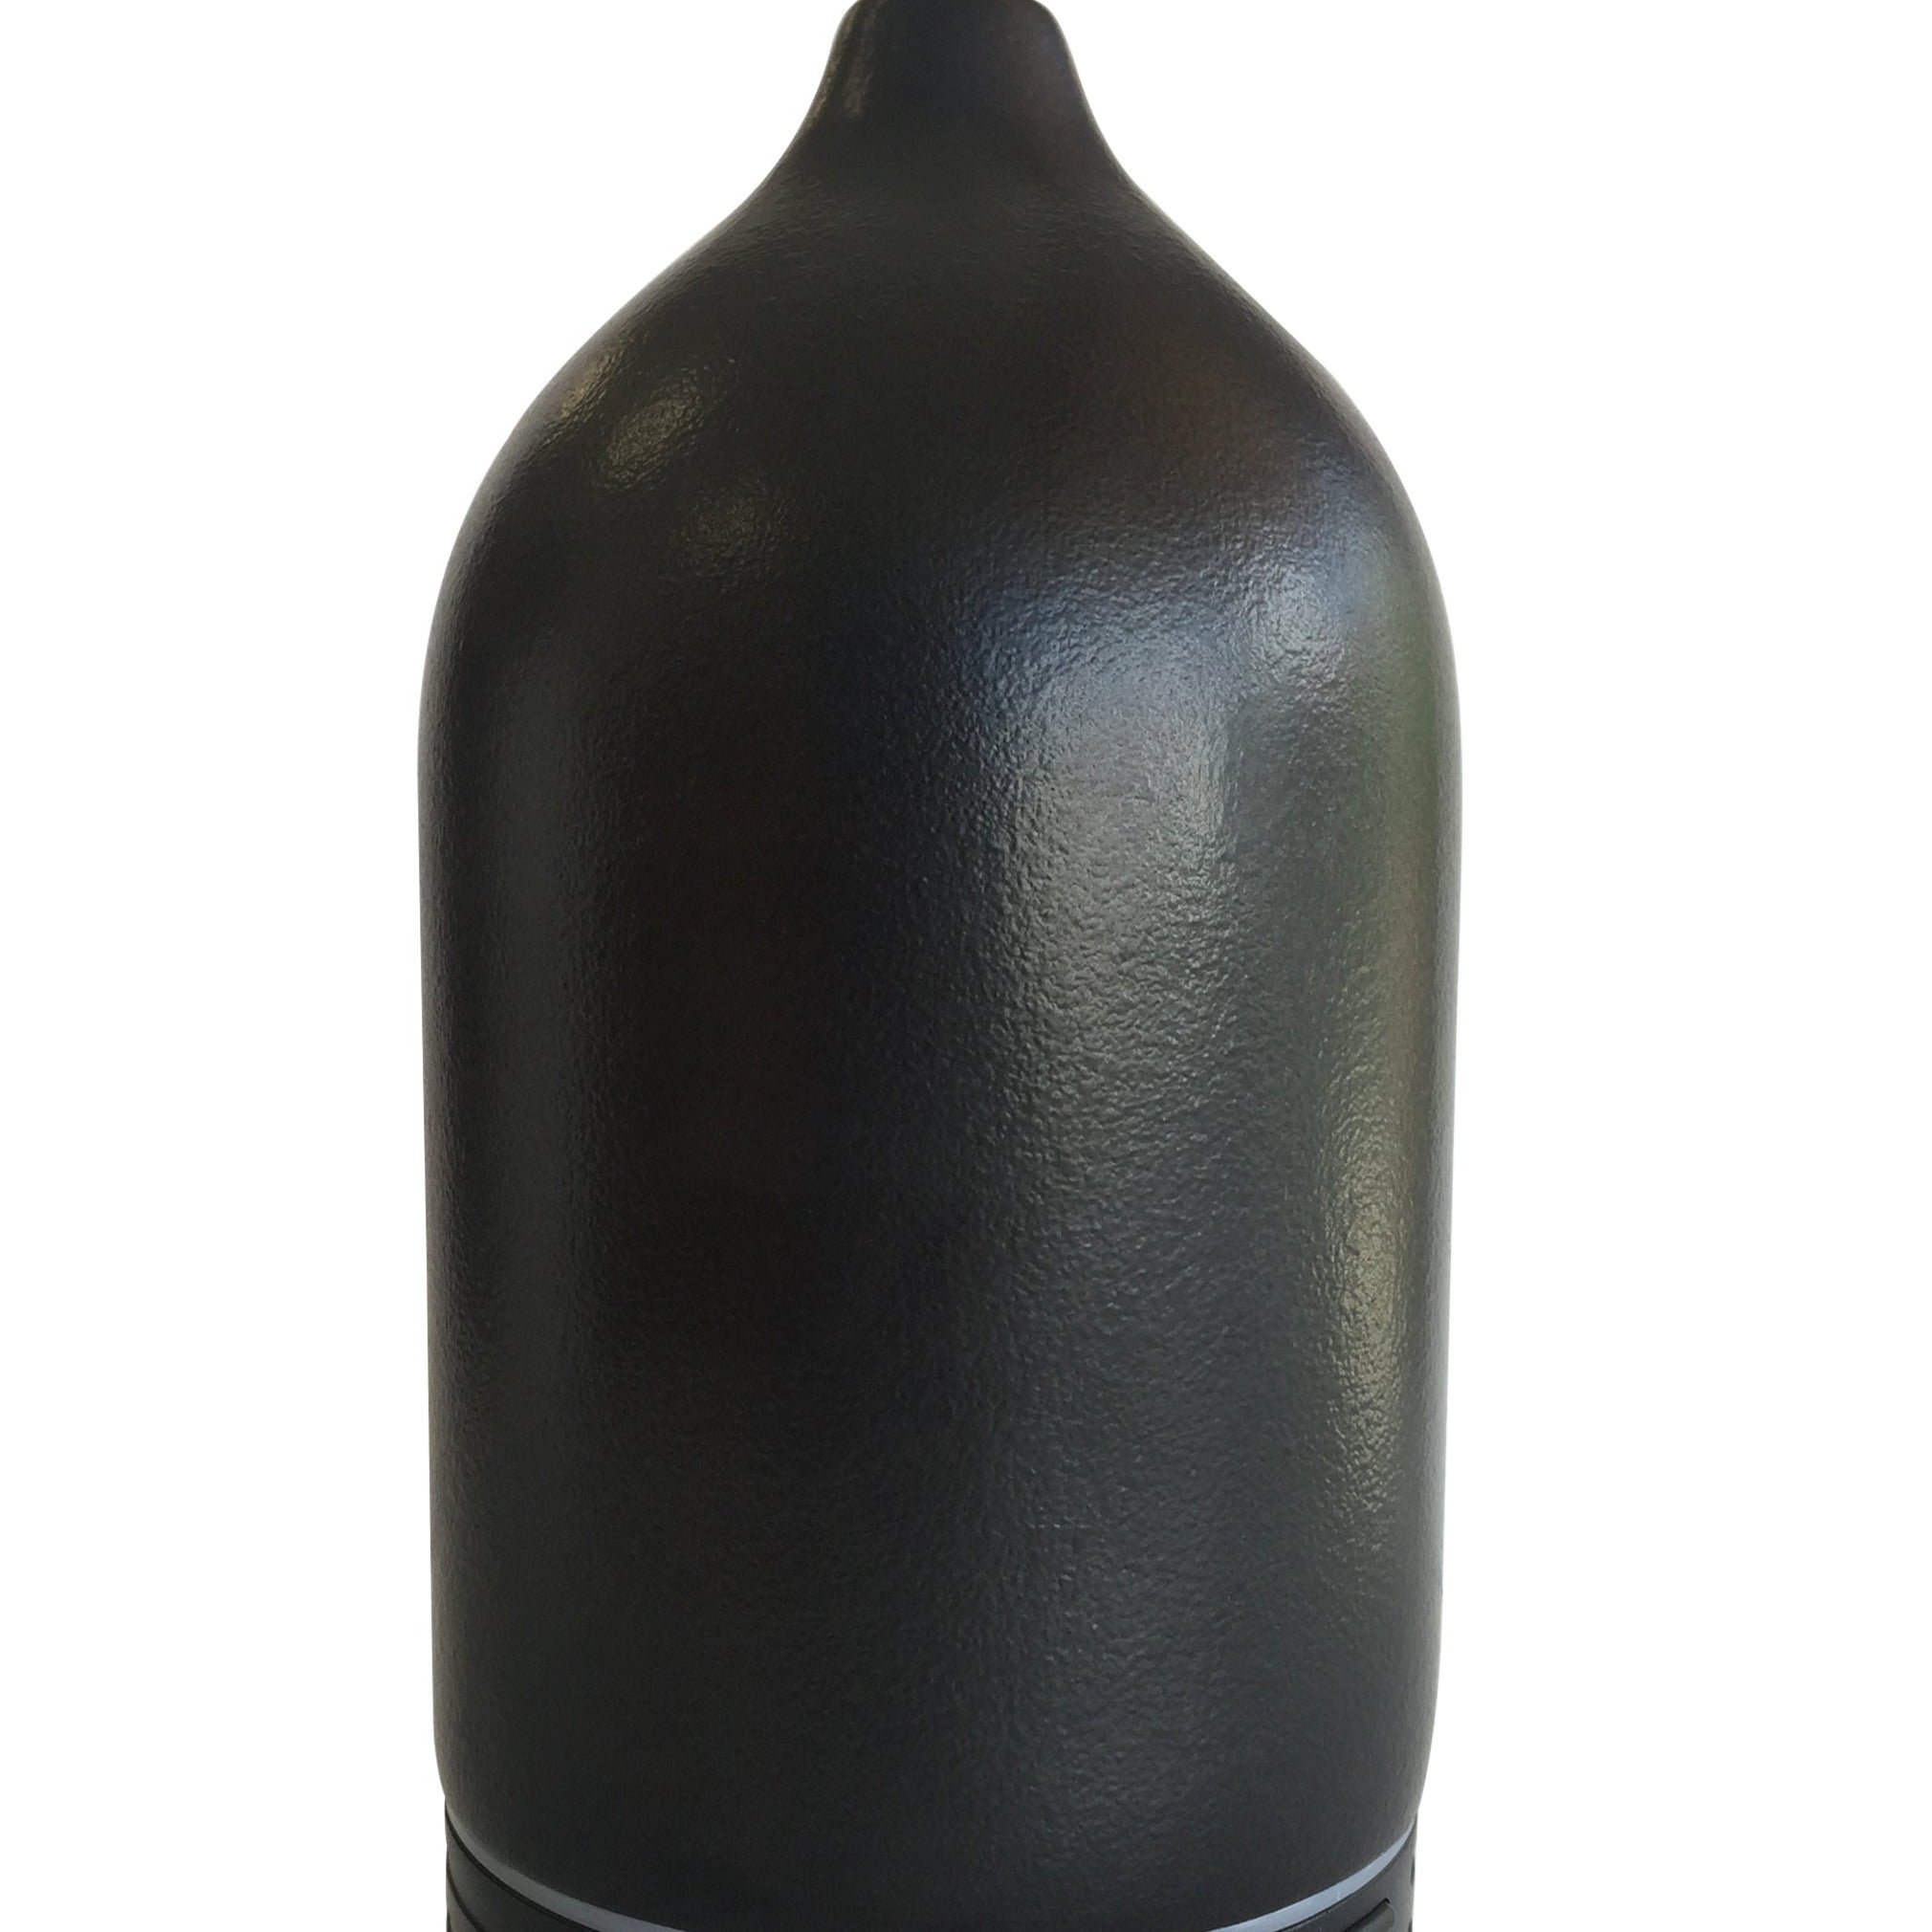 Ceramic Aromatherapy Diffuser - Black